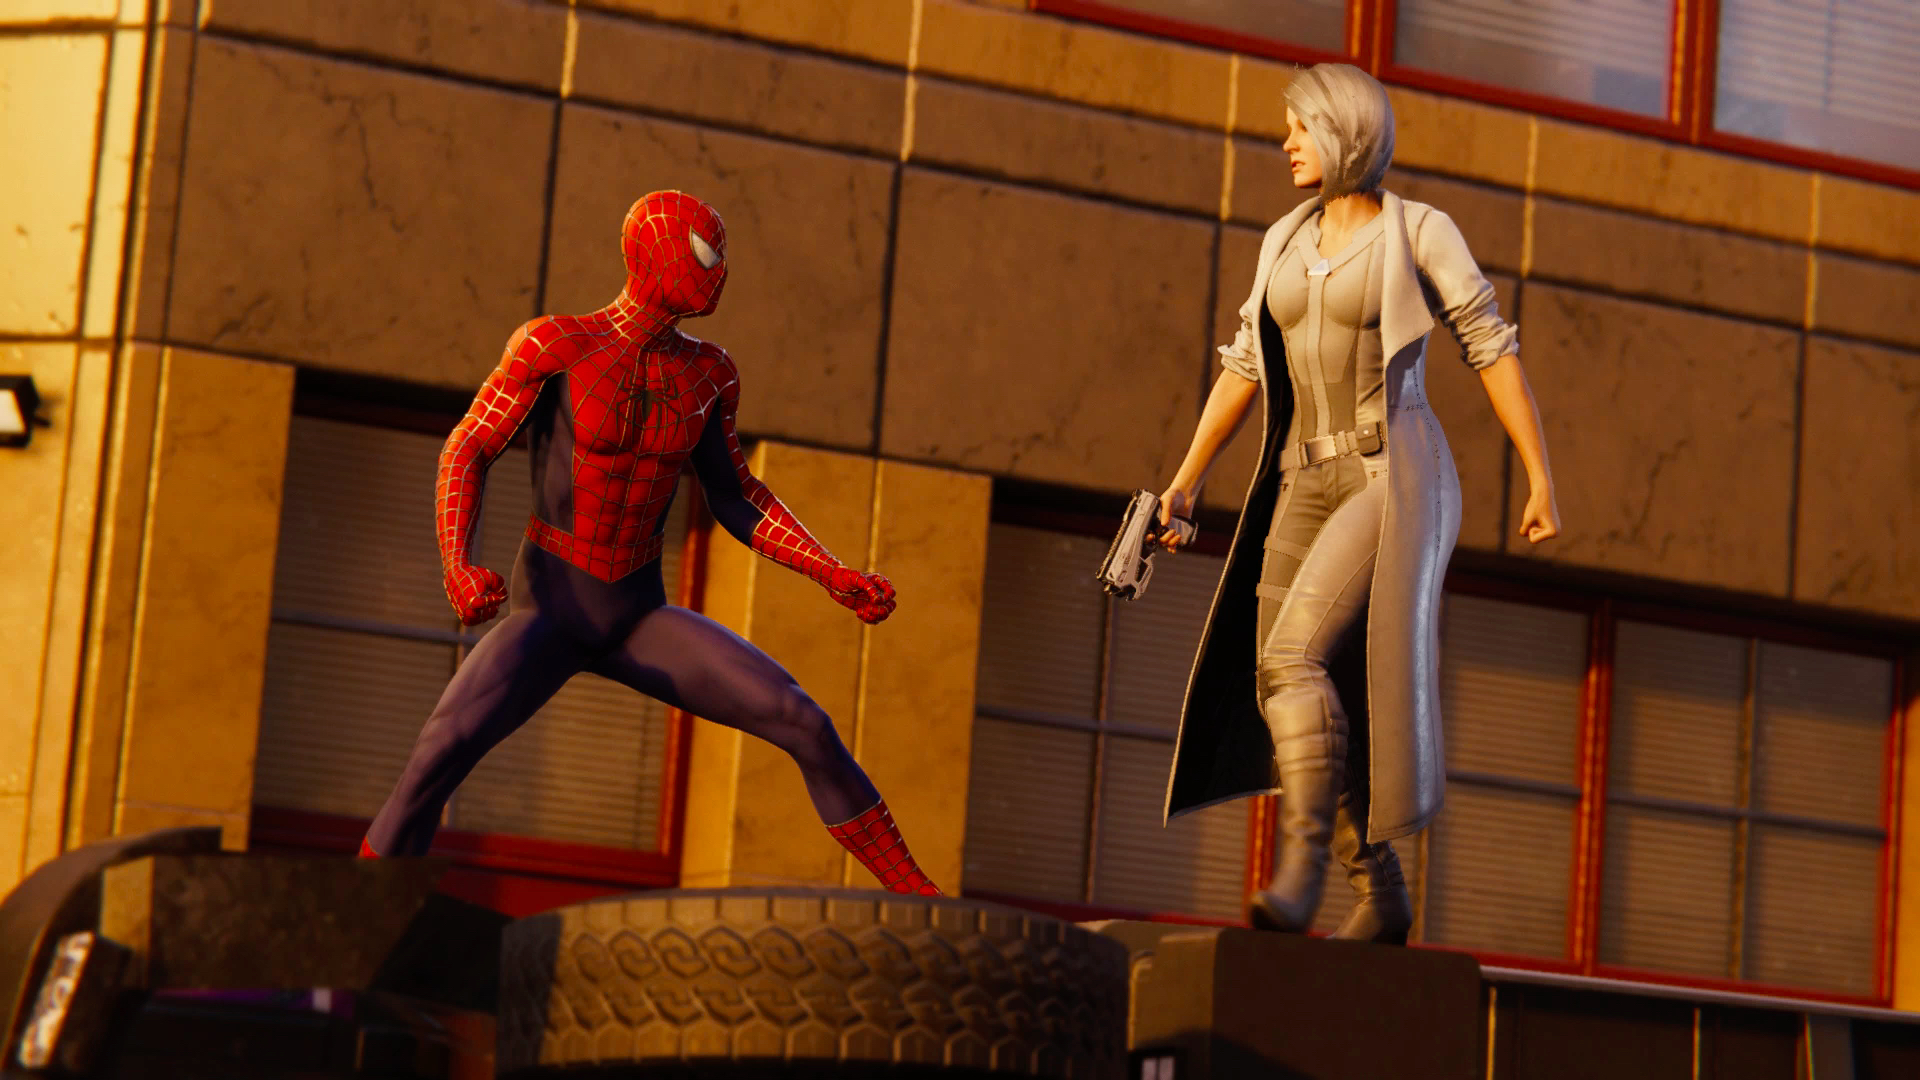 Full Recap: Marvel's Spider-Man, Its DLC, And Miles Morales